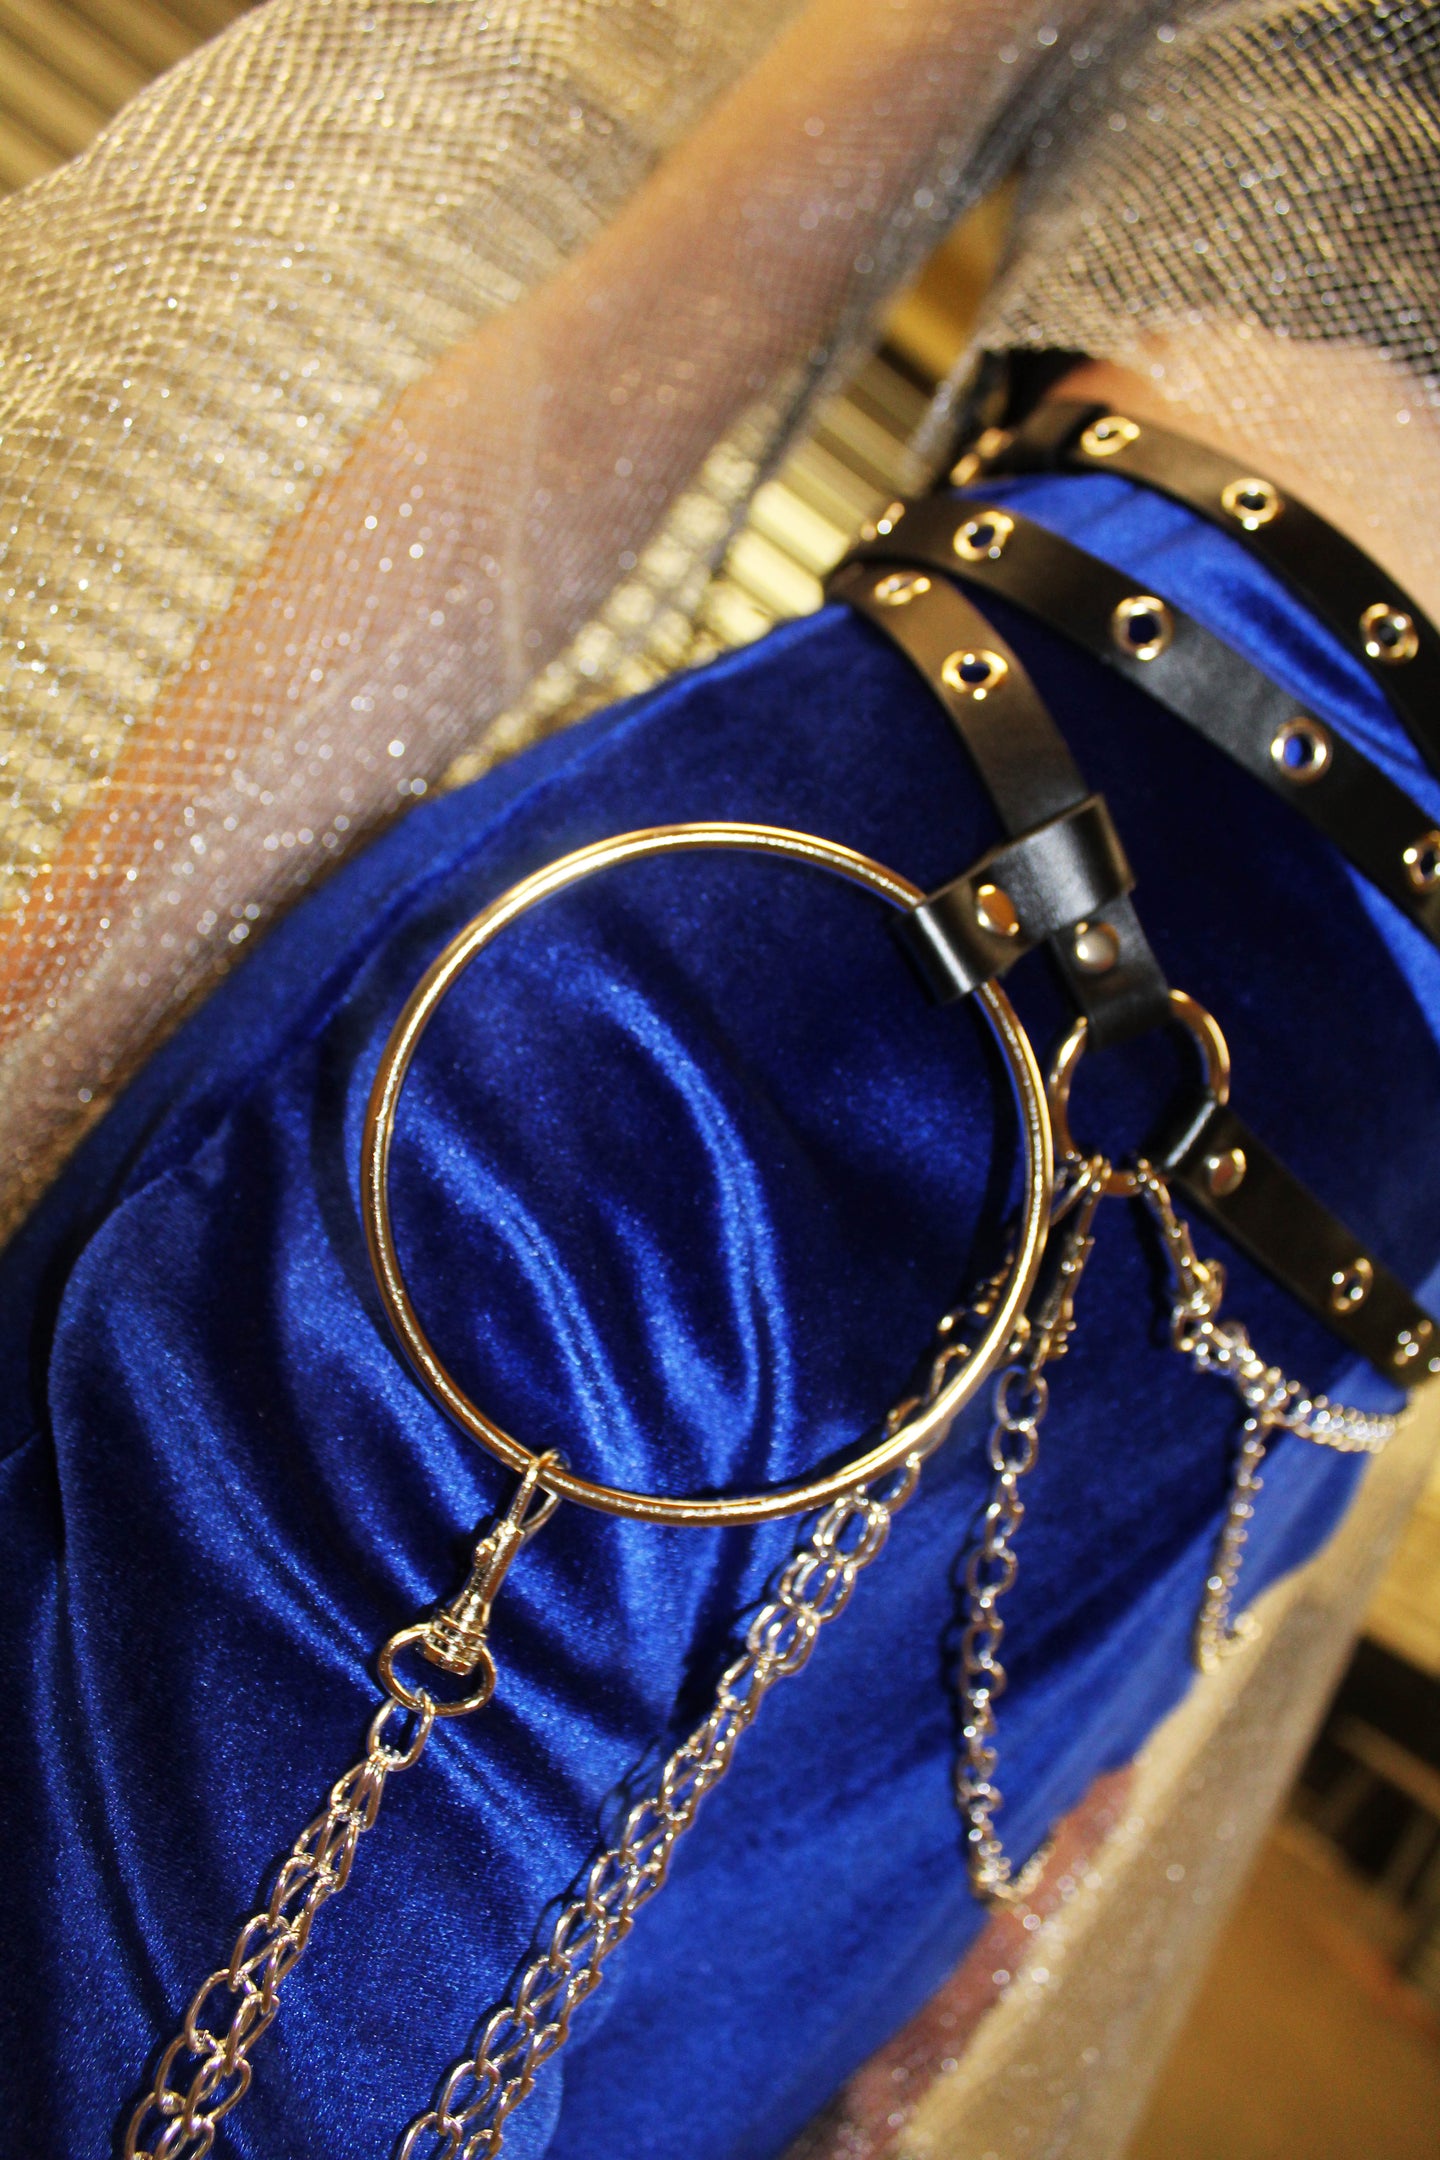 ‘METAL’ wrap around pleather harness chain belt